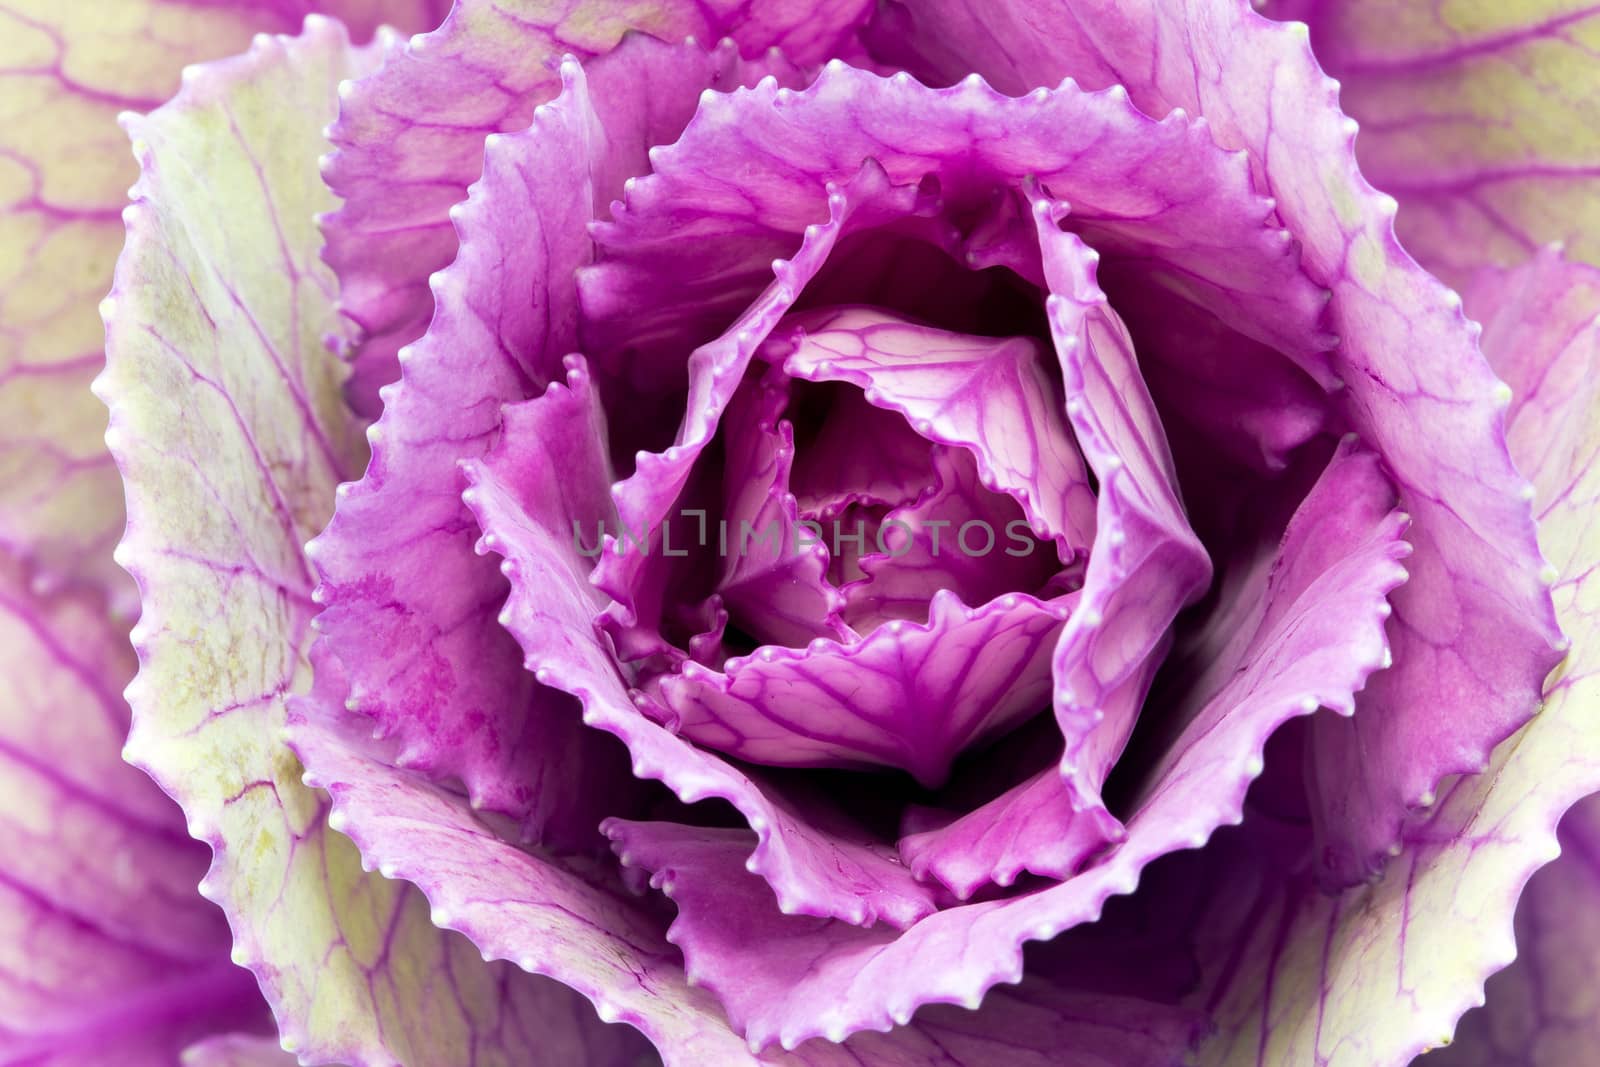  single flower of violet  brassica oleracea - close up